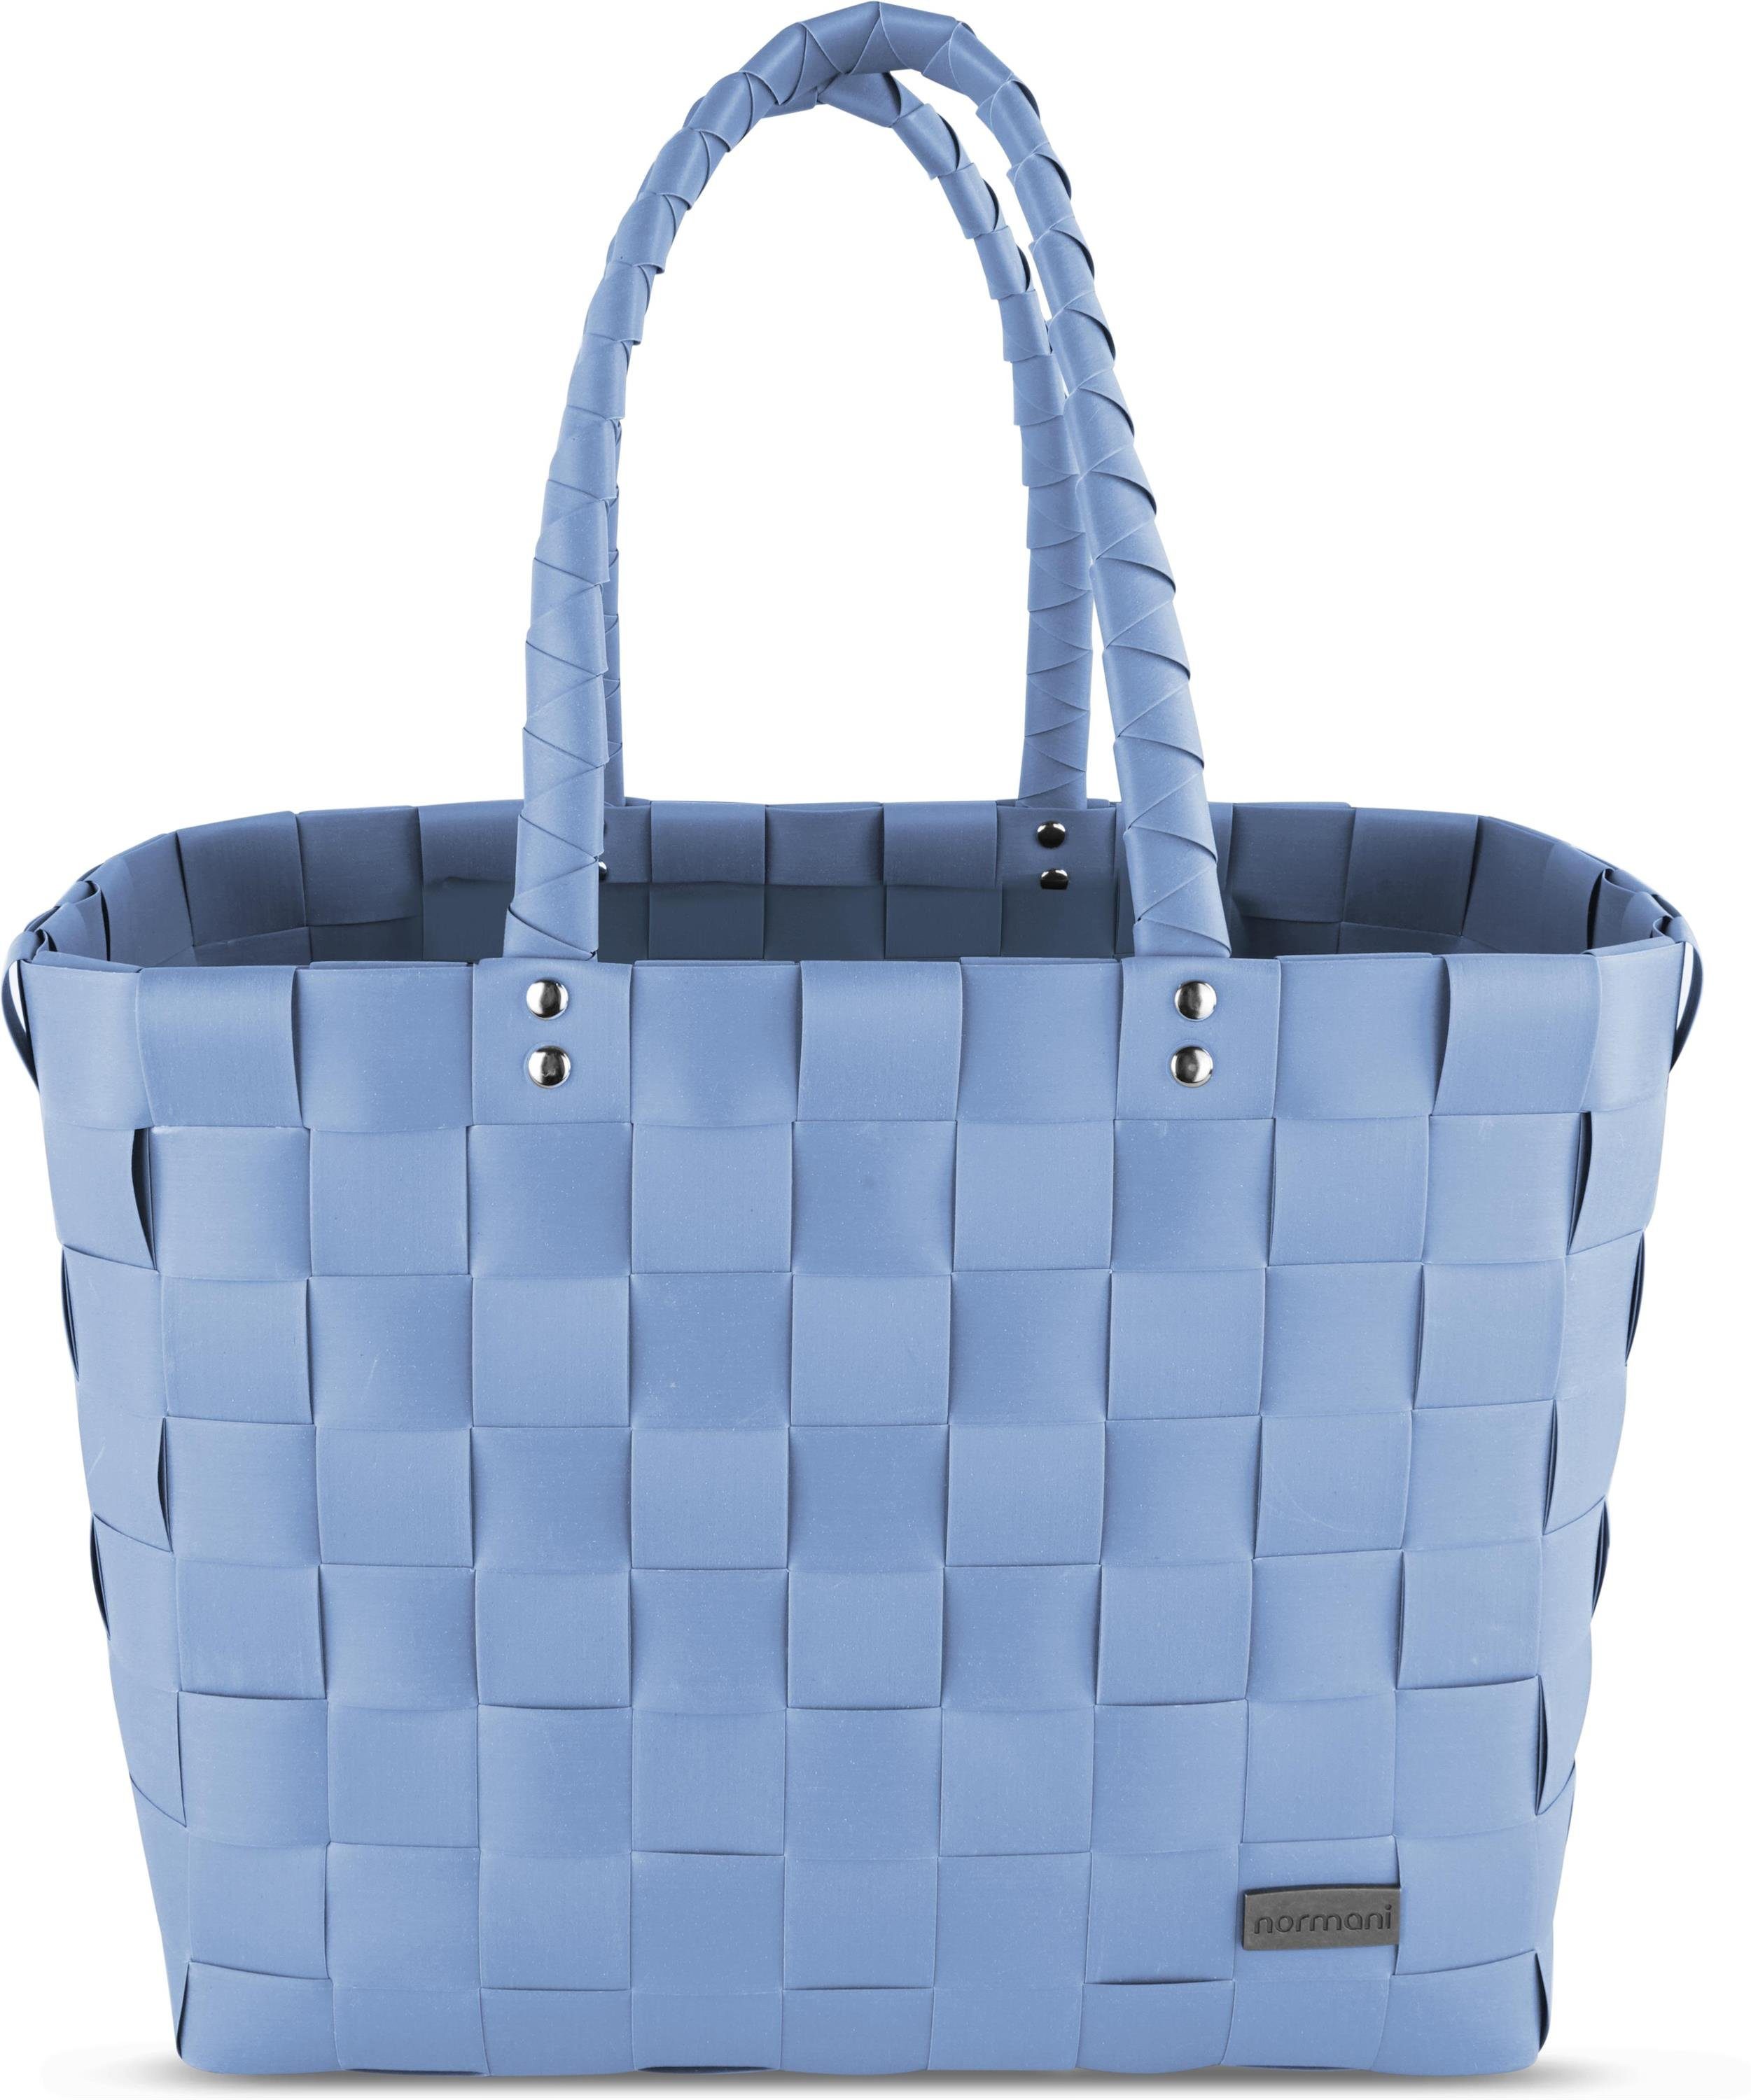 normani Einkaufskorb Einkaufskorb Einkaufstasche aus Kunststoff, 20 l, Flechtkorb aus pflegeleichtem Material Light Blue